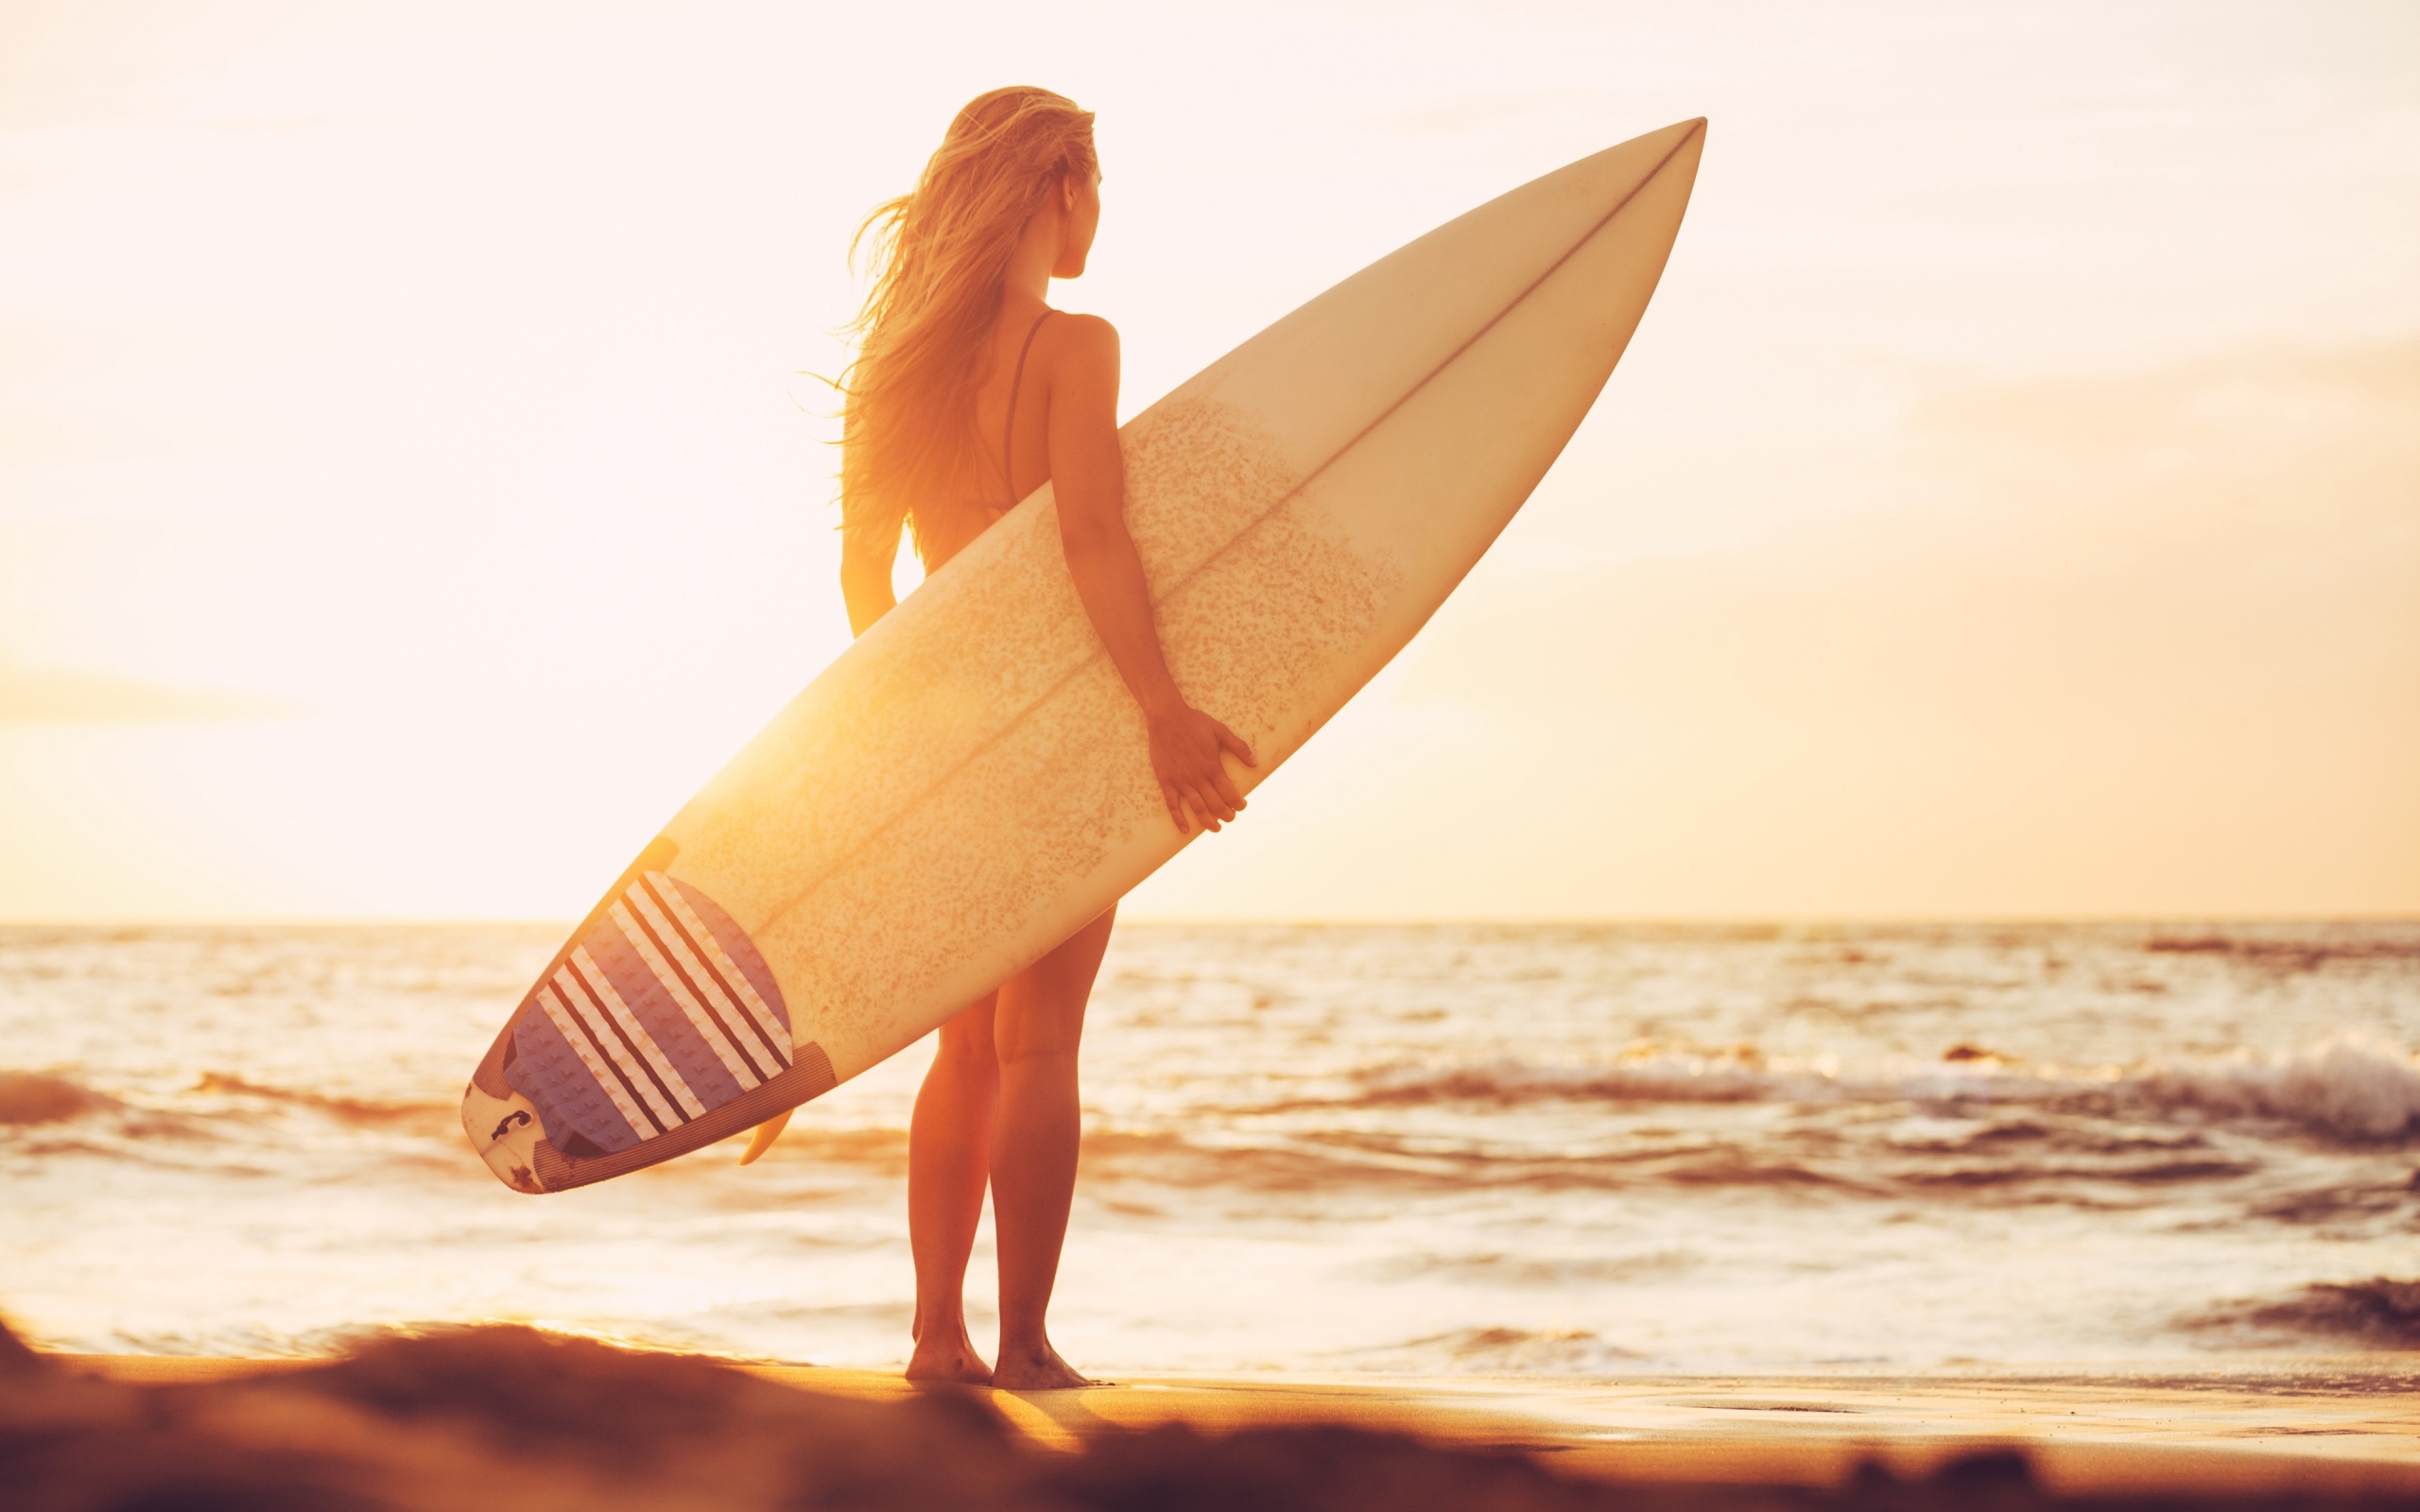 Girl Surfboard At Sunset Beach Wallpapers 2560x1600 603390